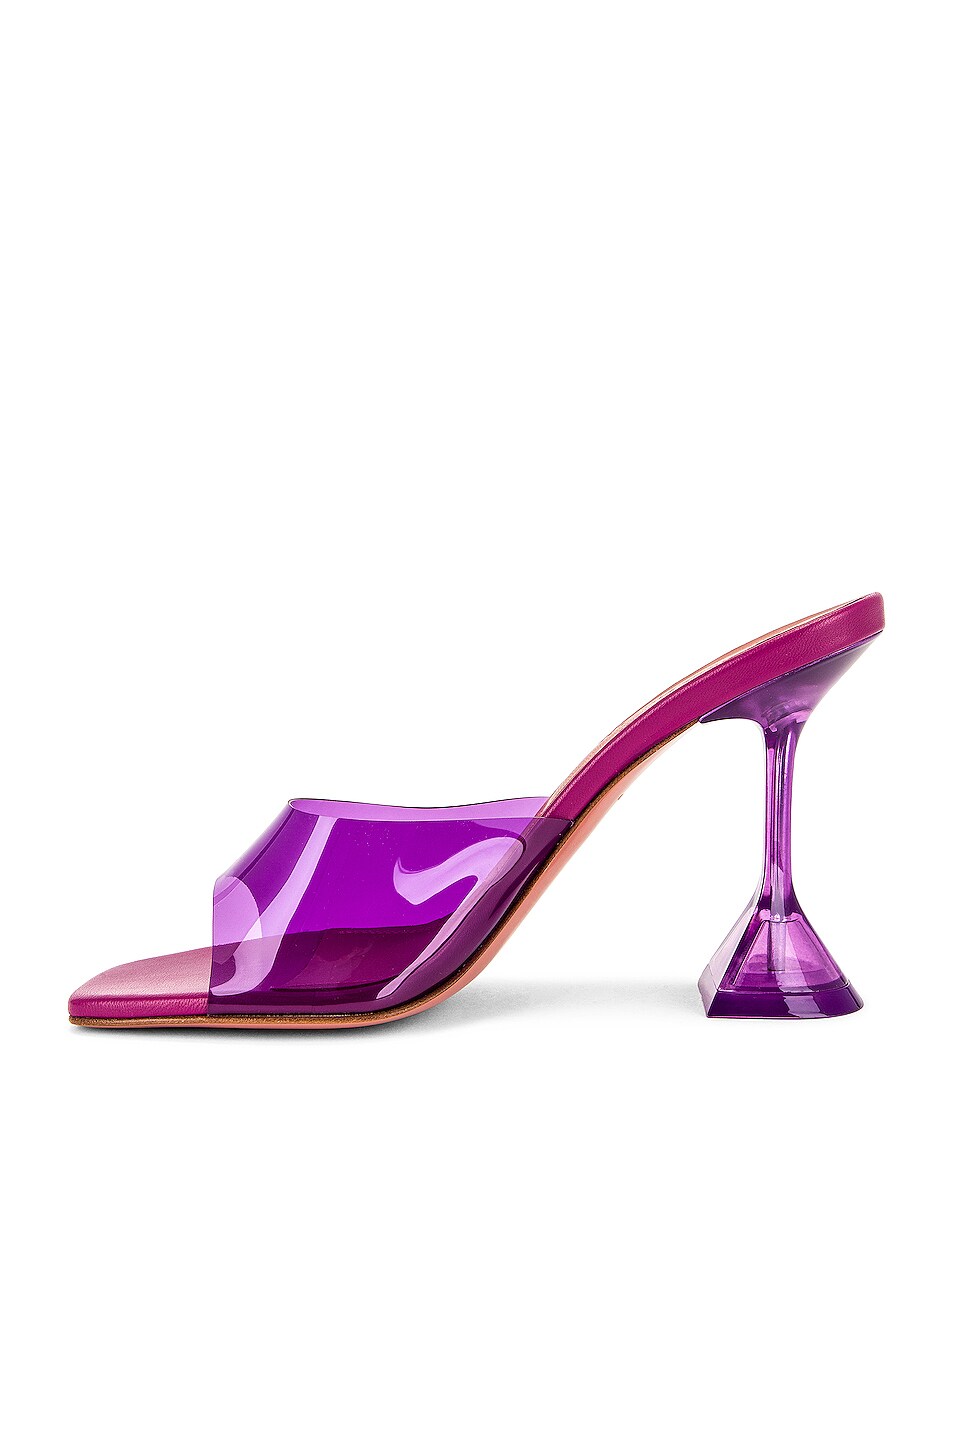 AMINA MUADDI Lupita Glass Sandal in Lilac | FWRD